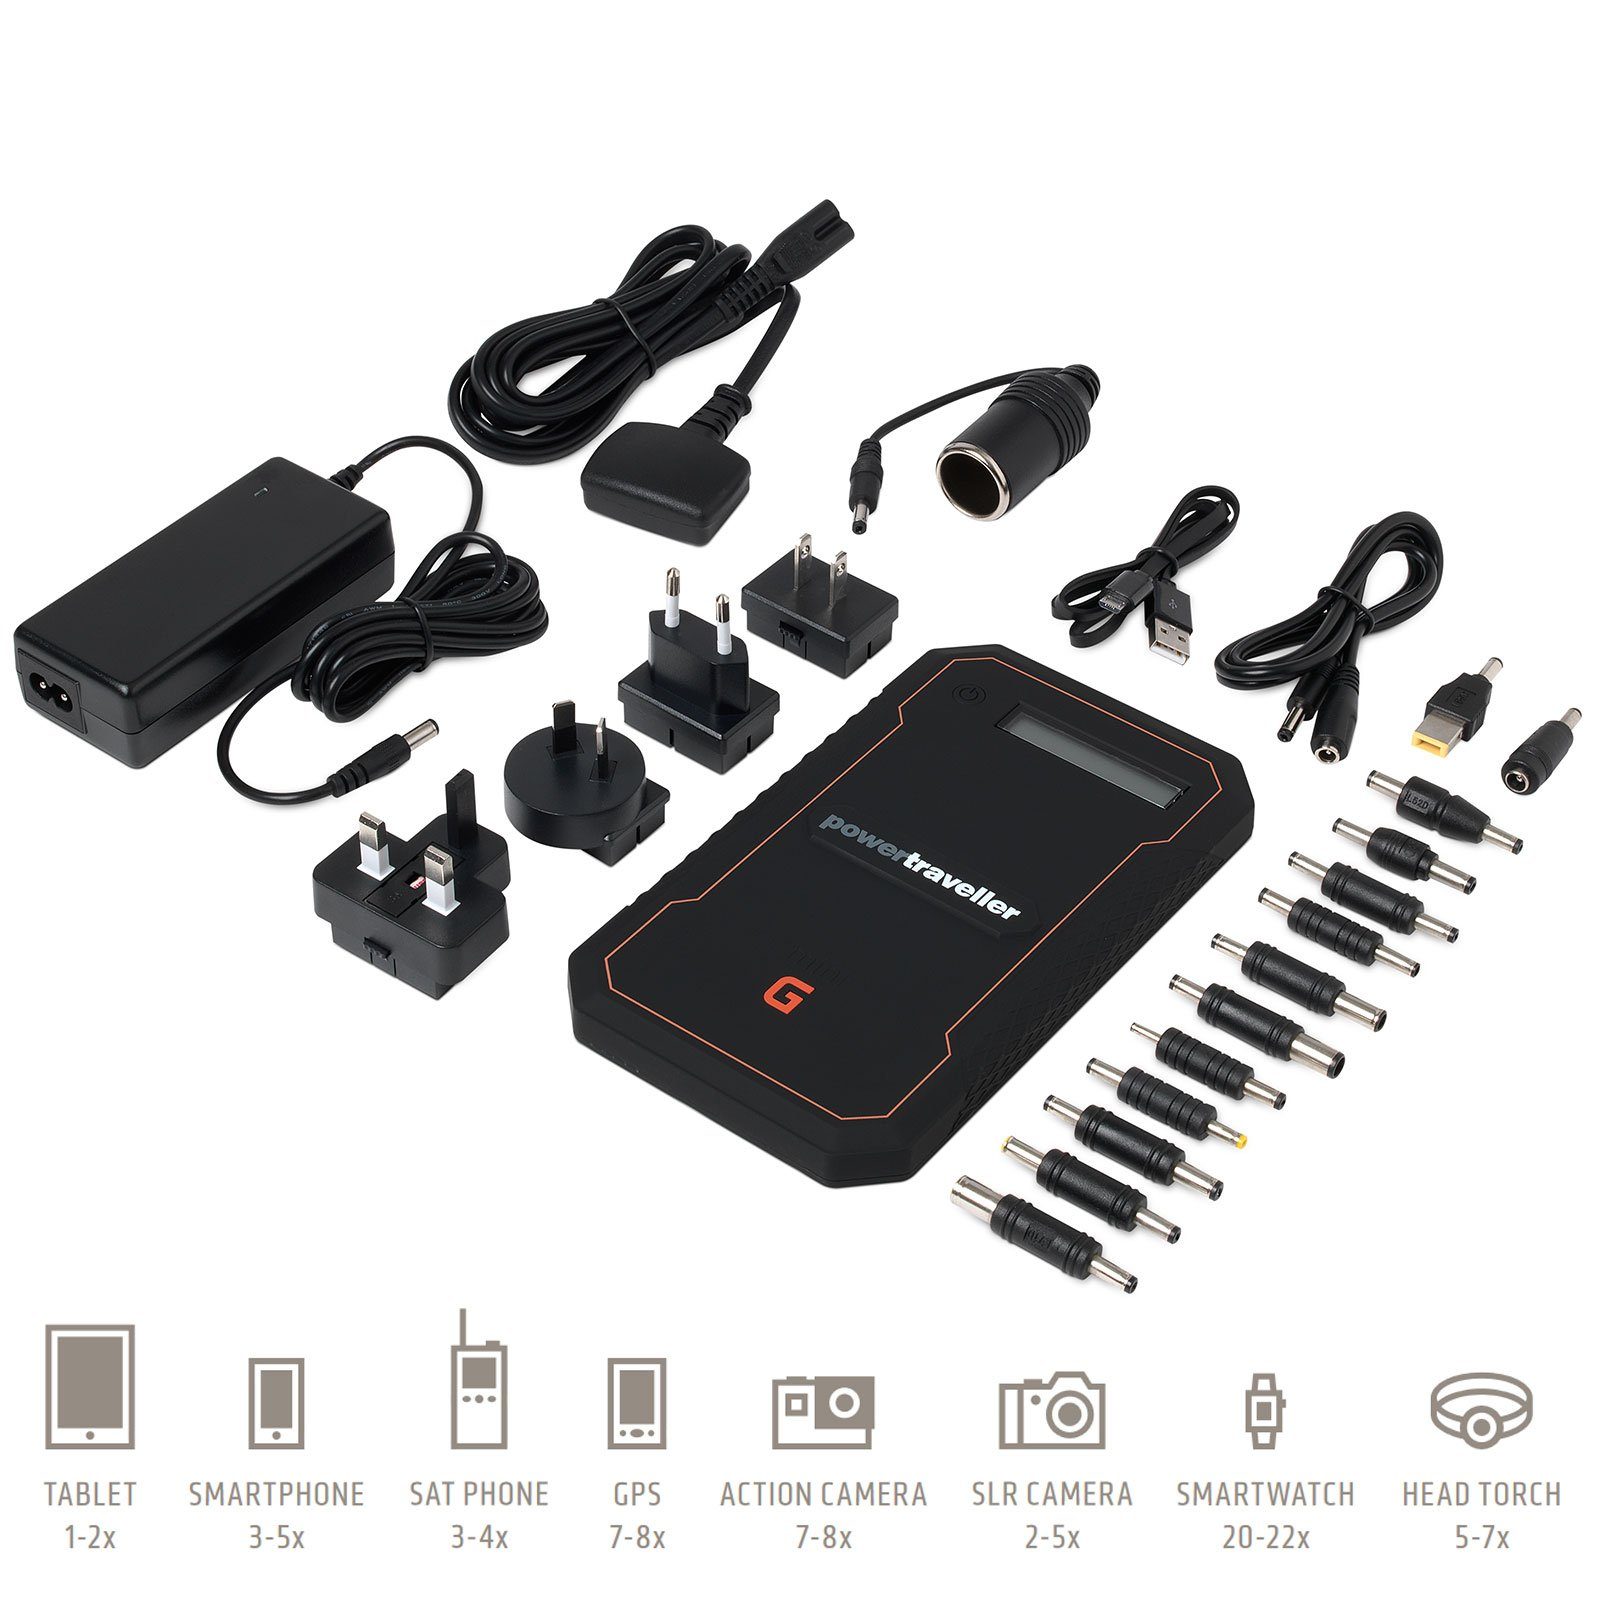 Powertraveller »Mini-G Powerbank 19V/2A Outdoor« Powerbank, USB Ladegerät  12000mAh Akku 3Port